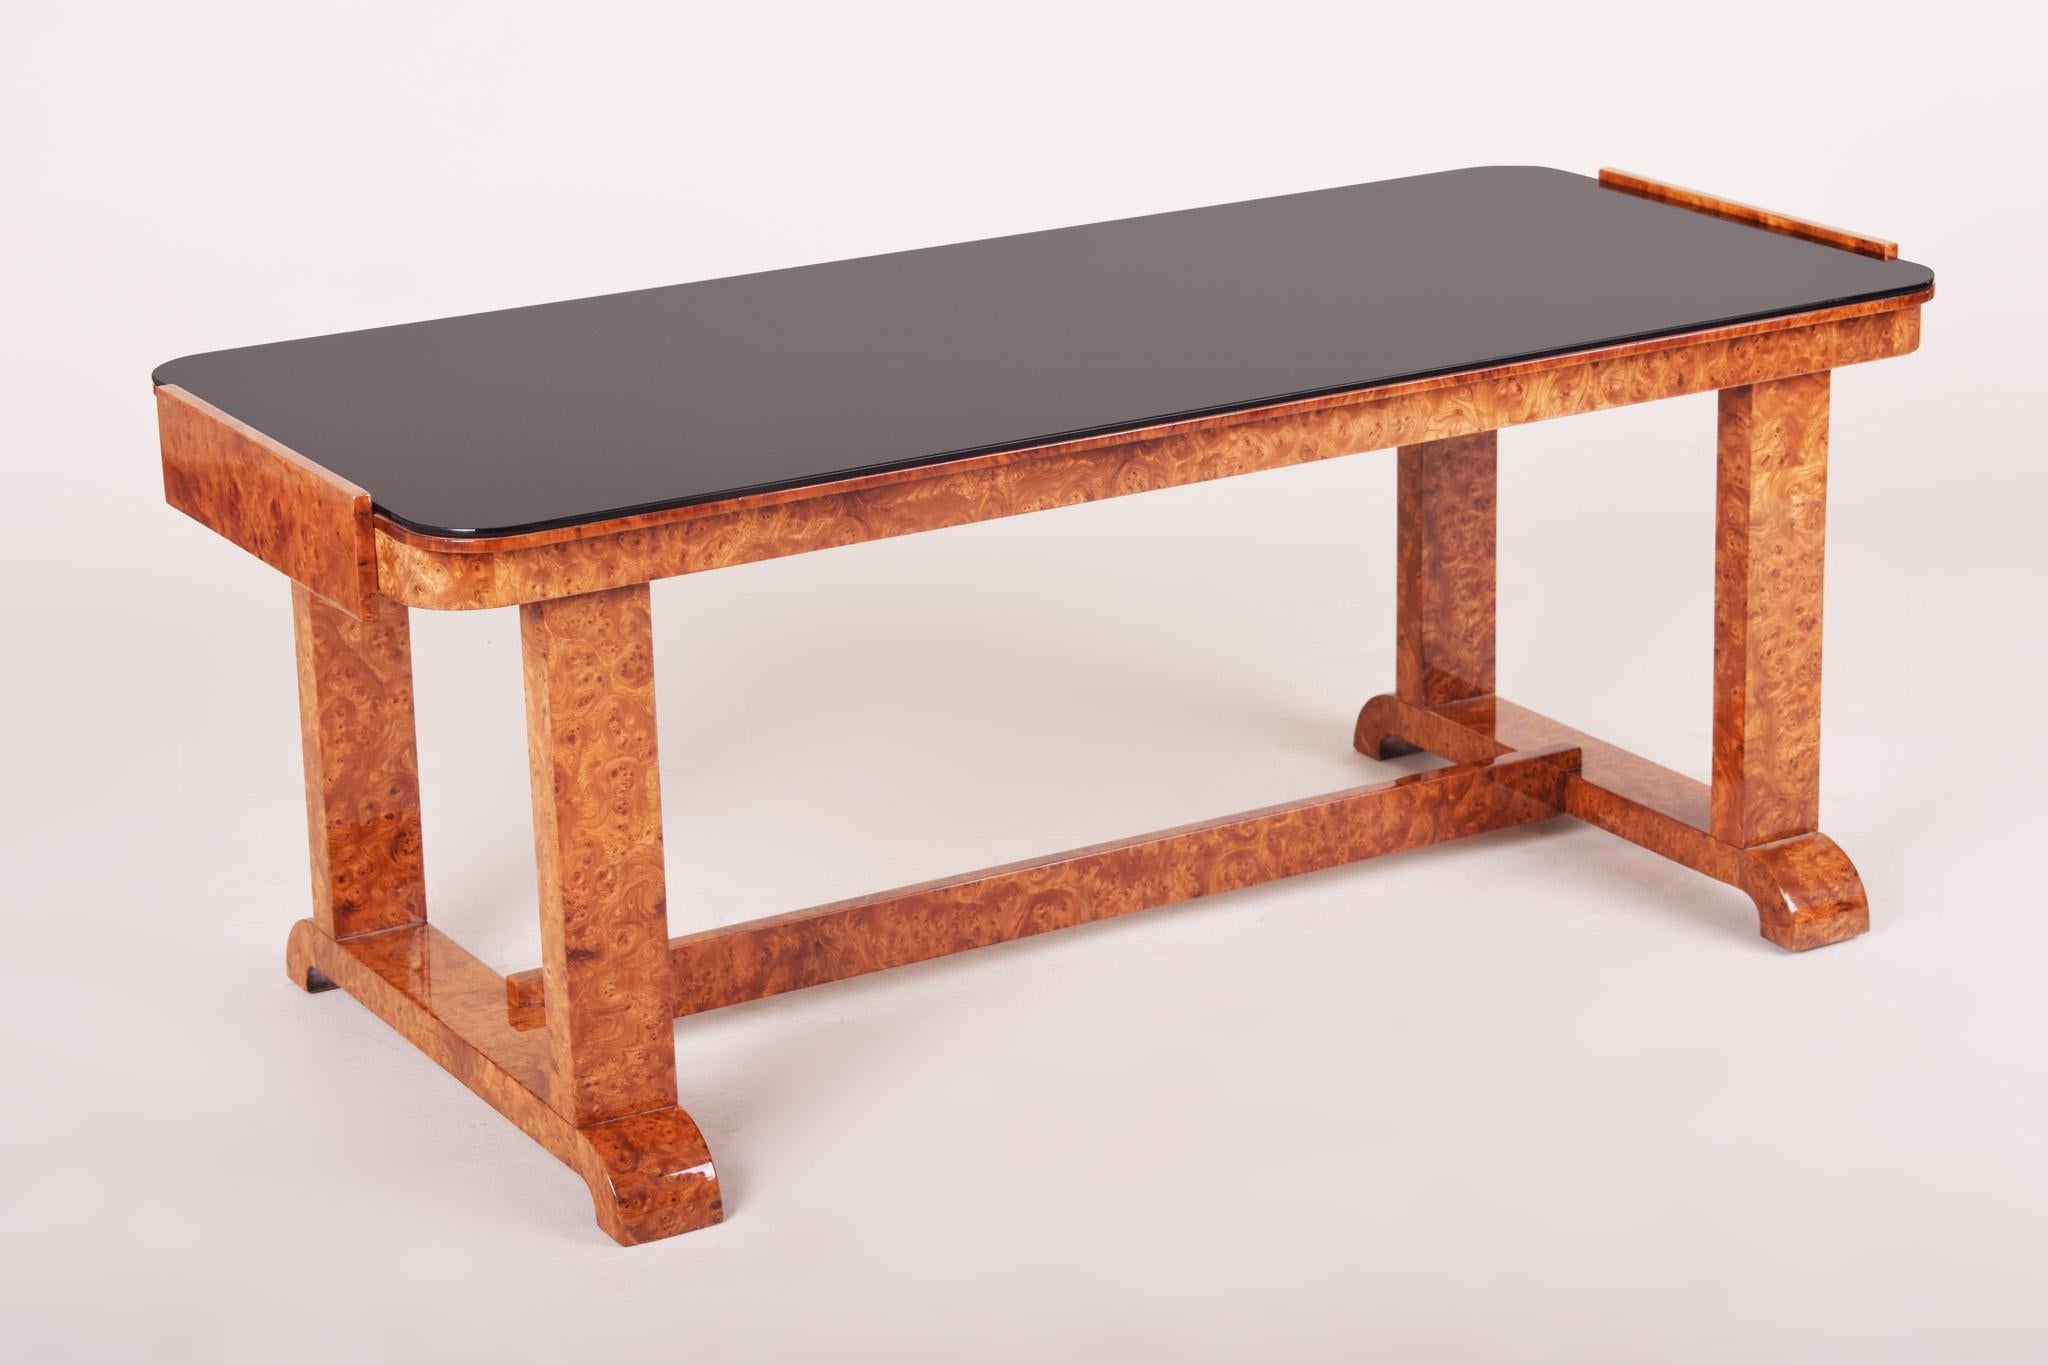 Petite table, Tchécoslovaquie, matériau noyer
Période : 1920-1929.